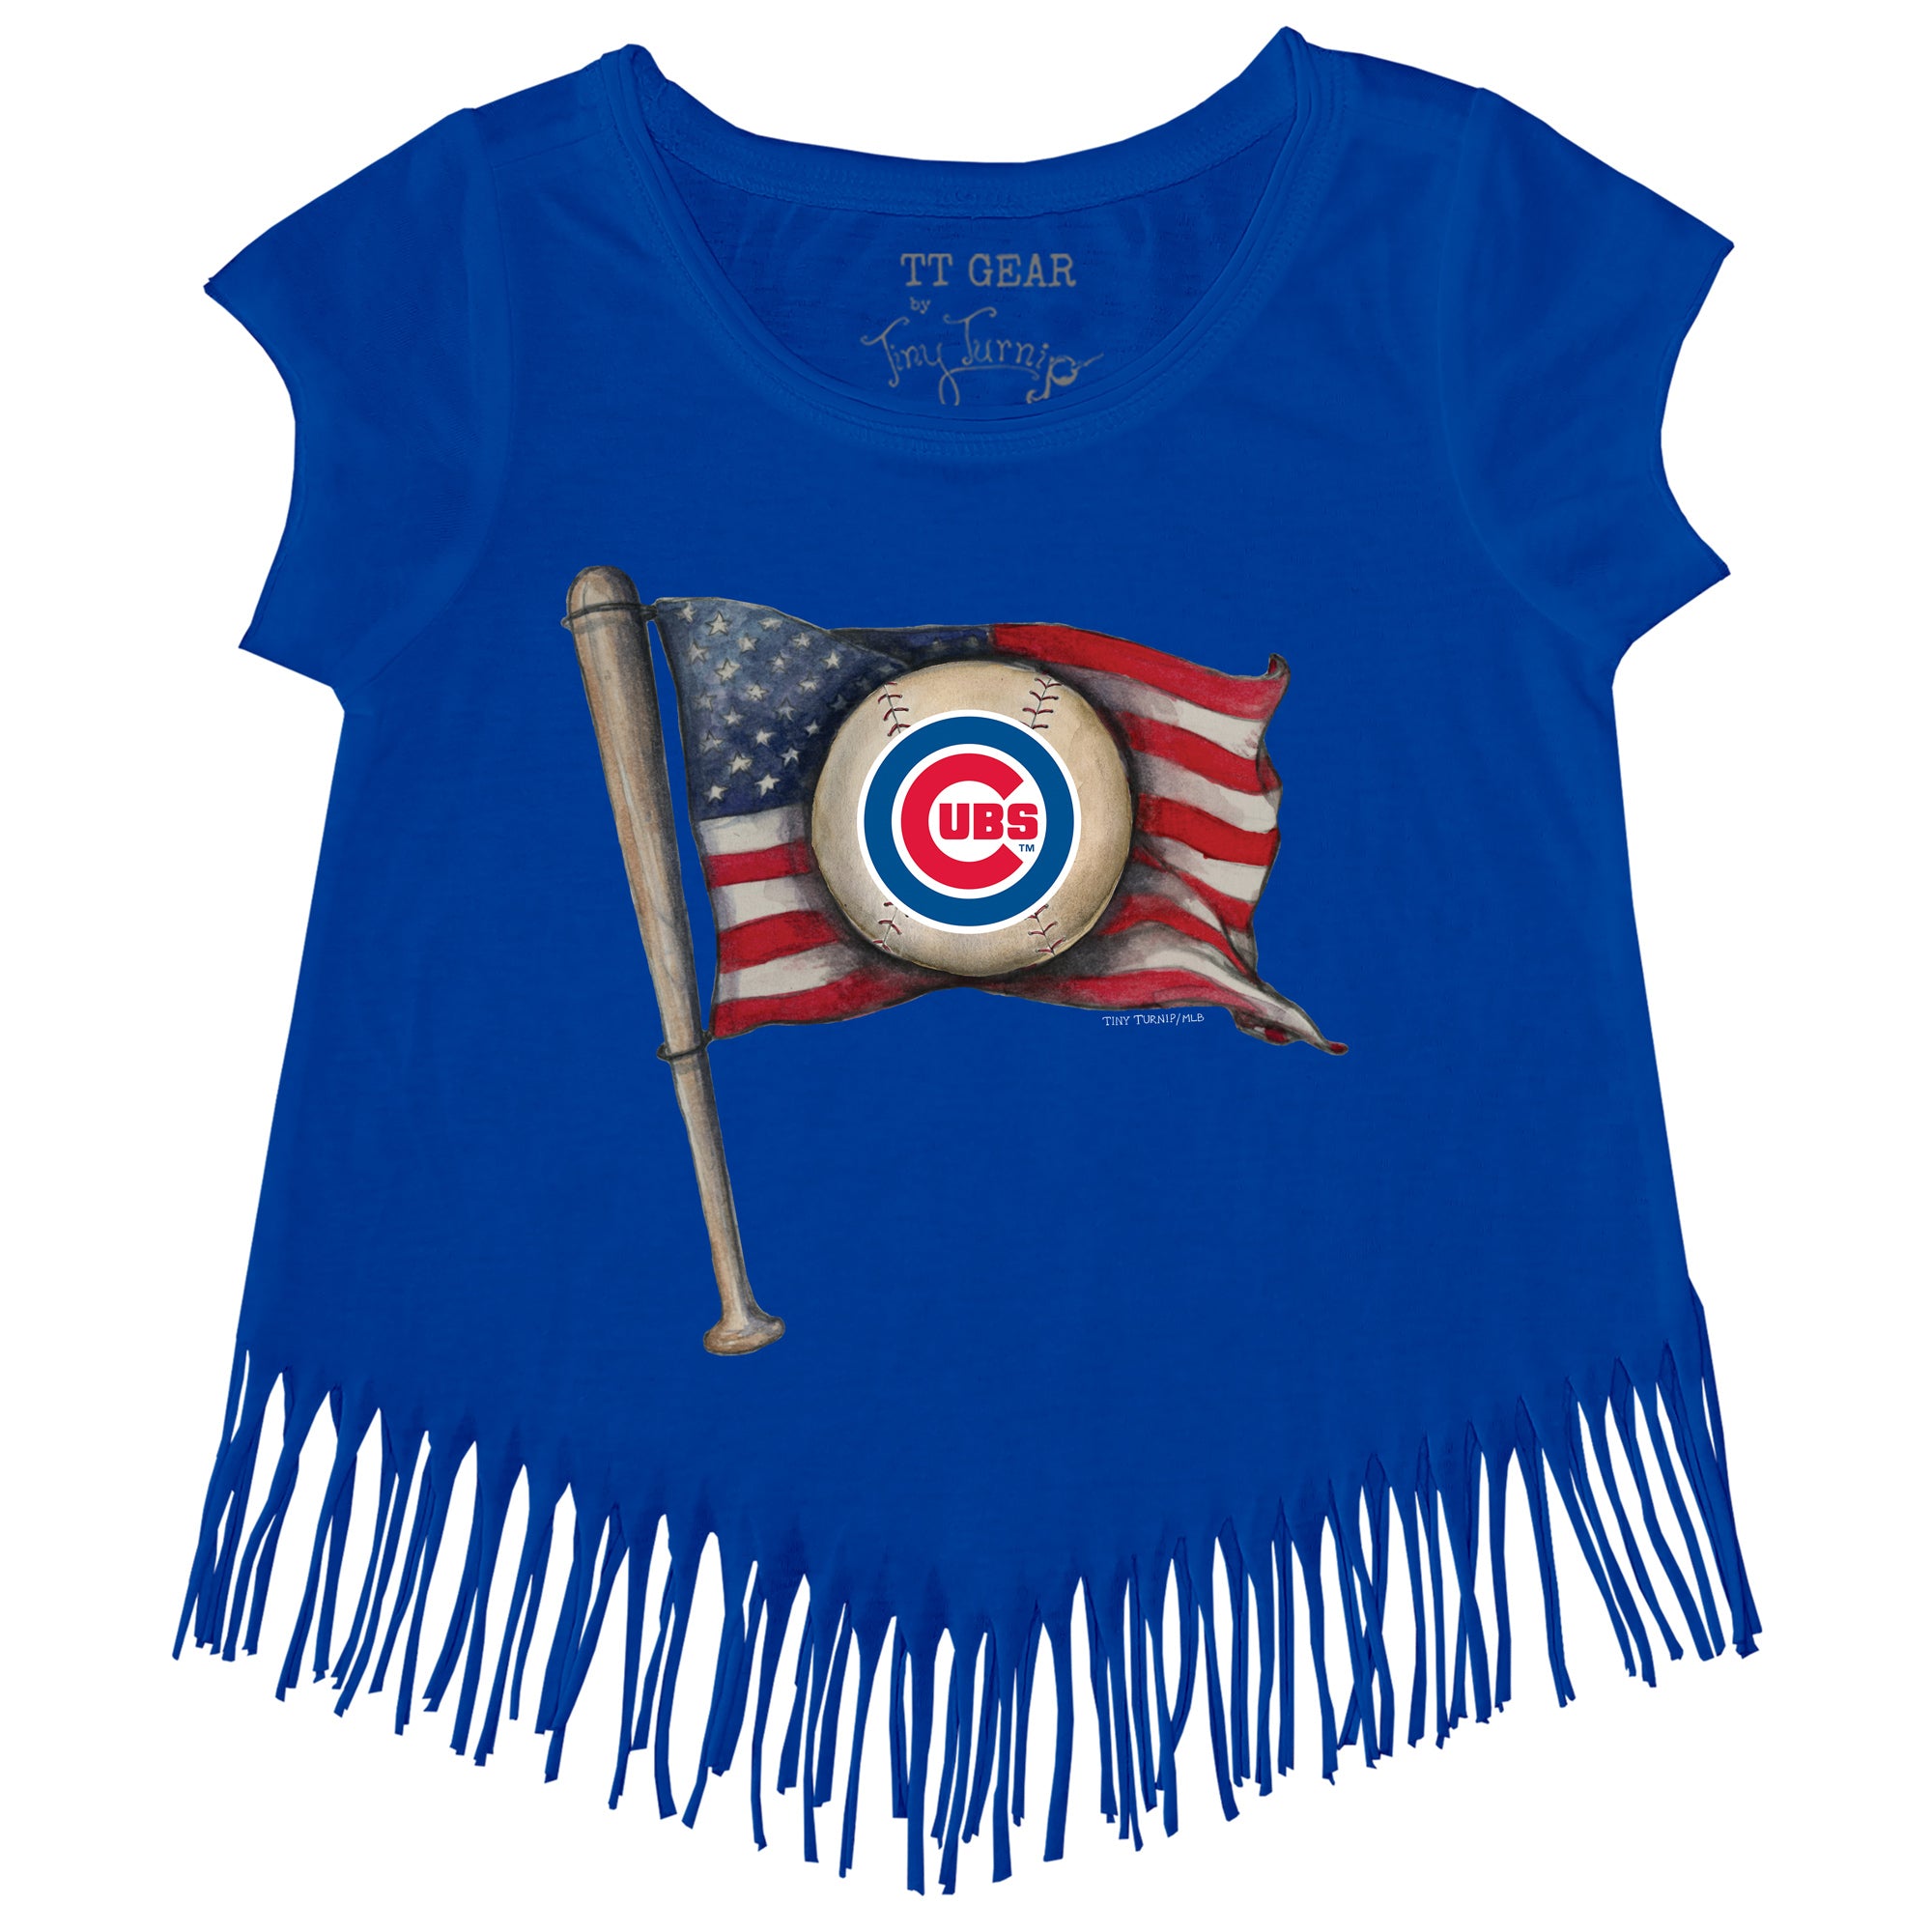 Infant Tiny Turnip Royal Chicago Cubs Baseball Flag T-Shirt